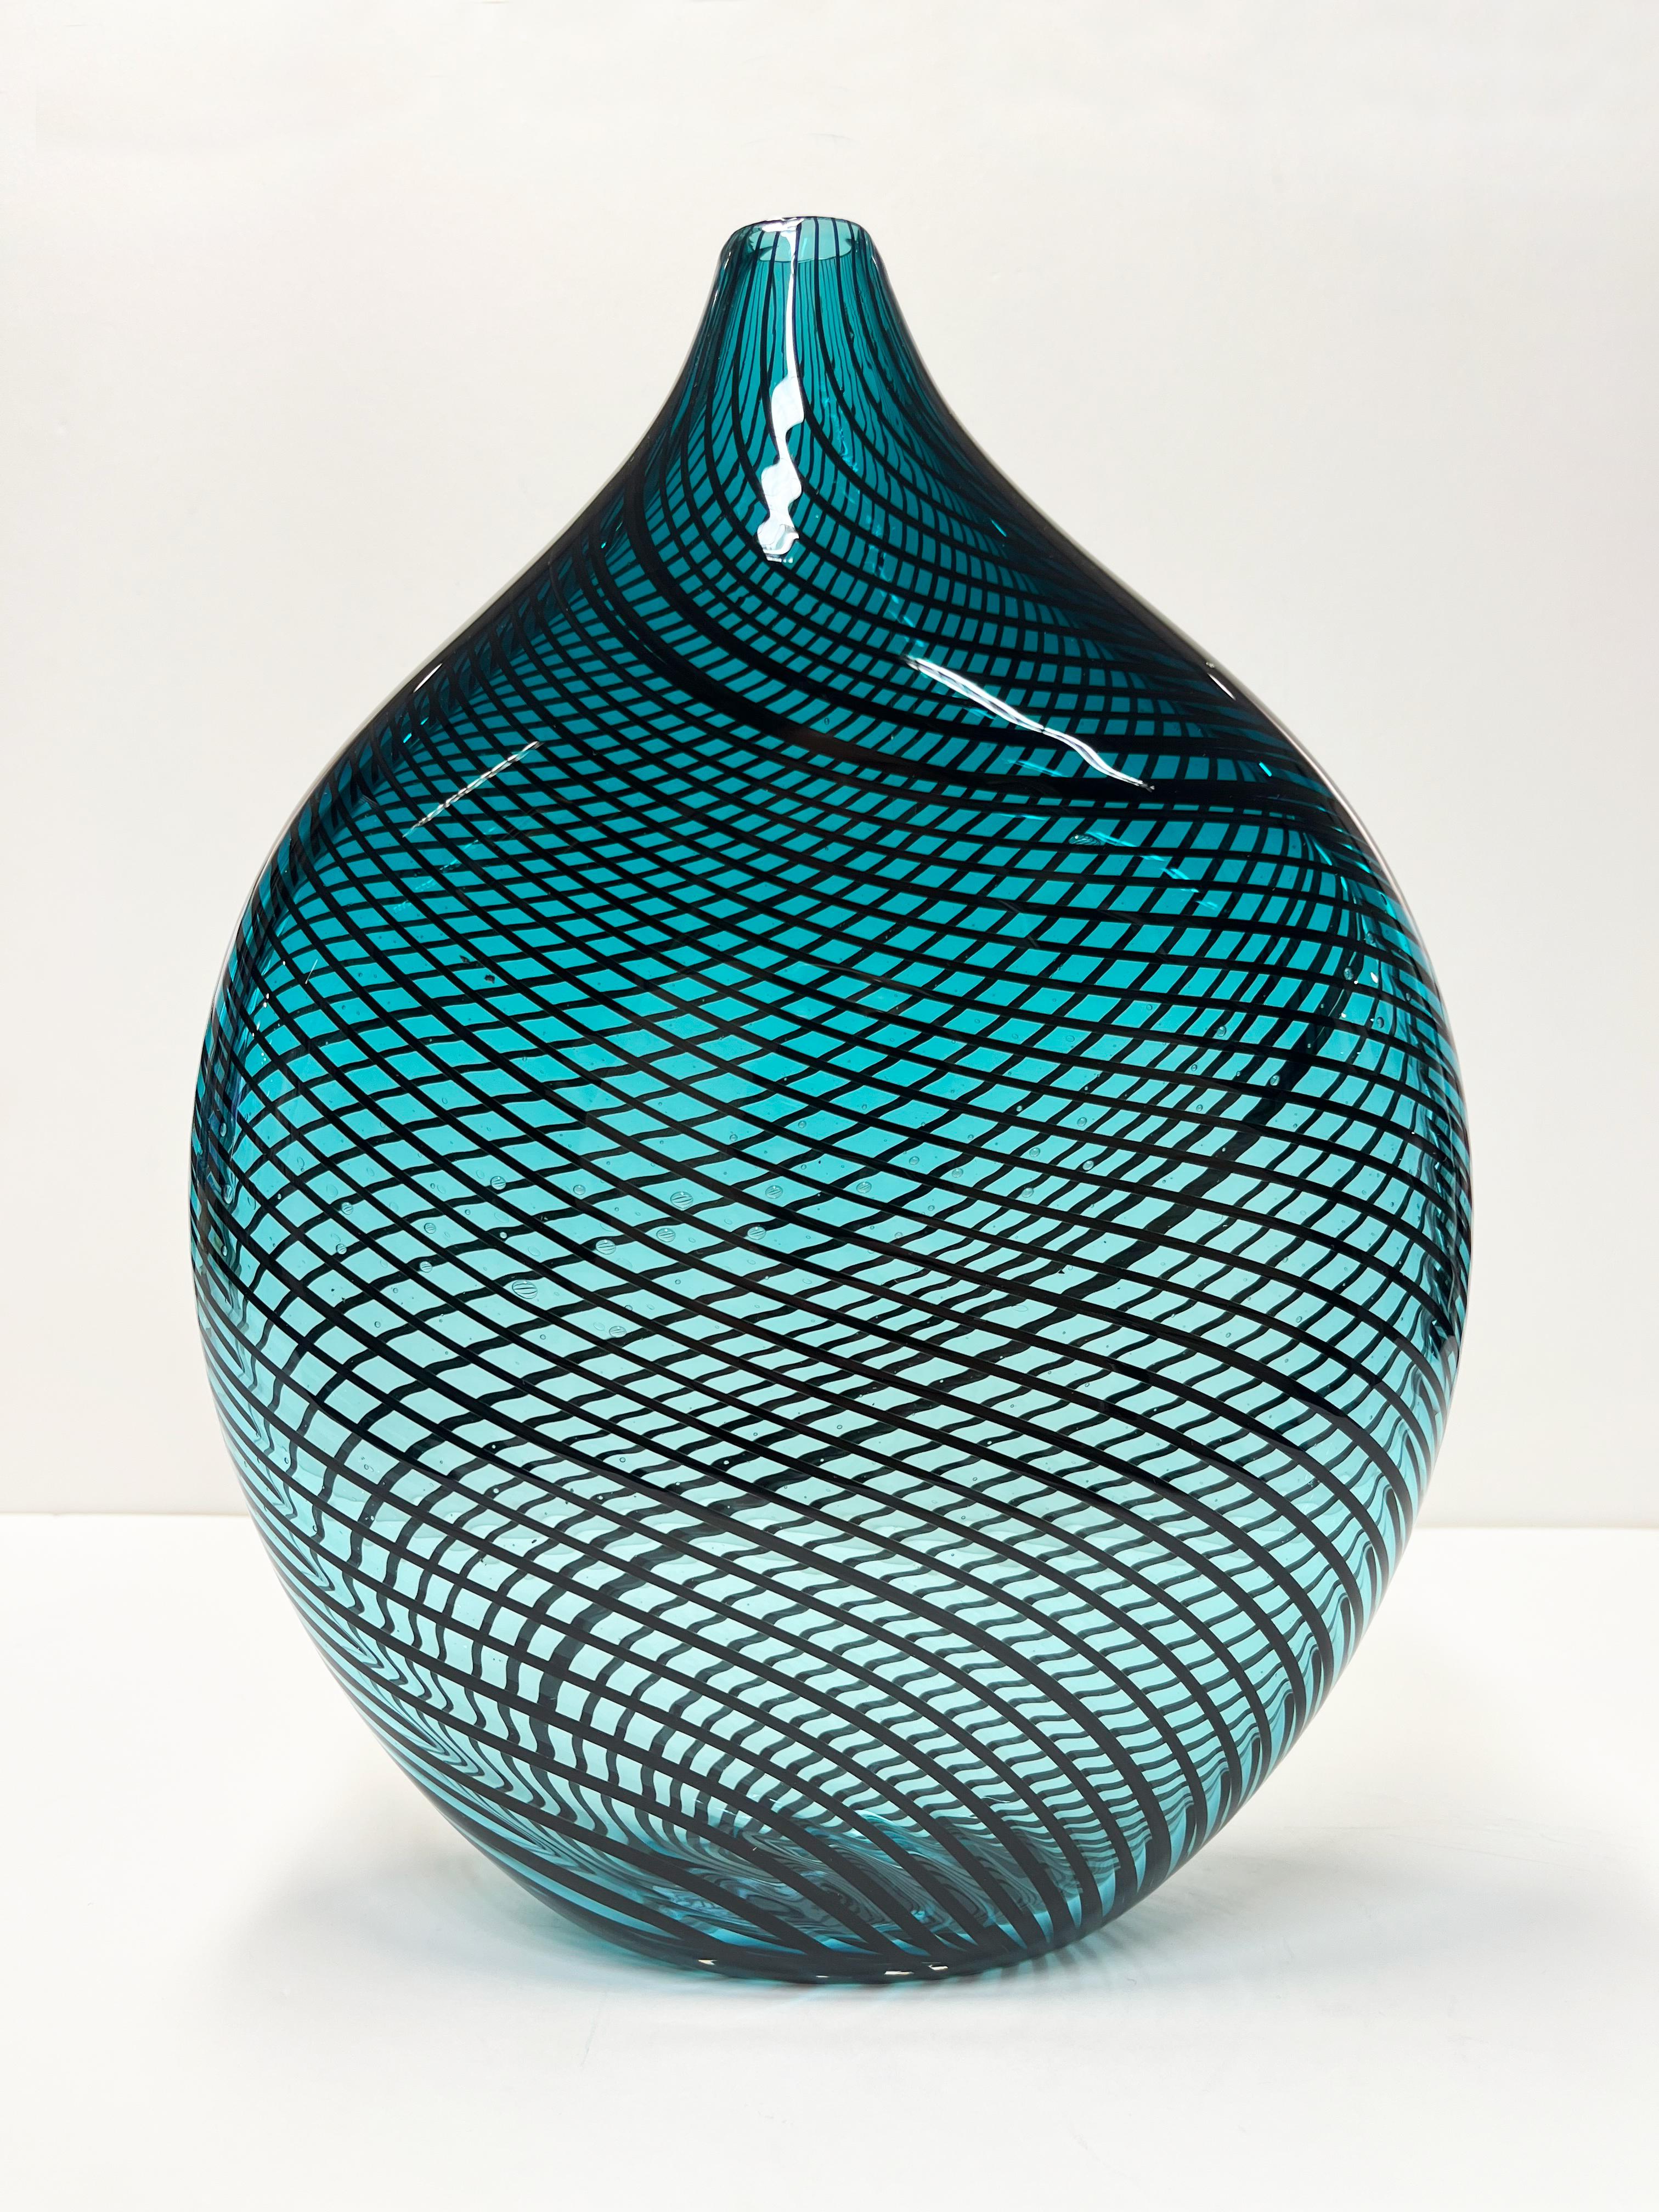 Alyssa Getz & Tom Cudmore Abstract Sculpture - Lagoon swirl cane glass vessel decorative object